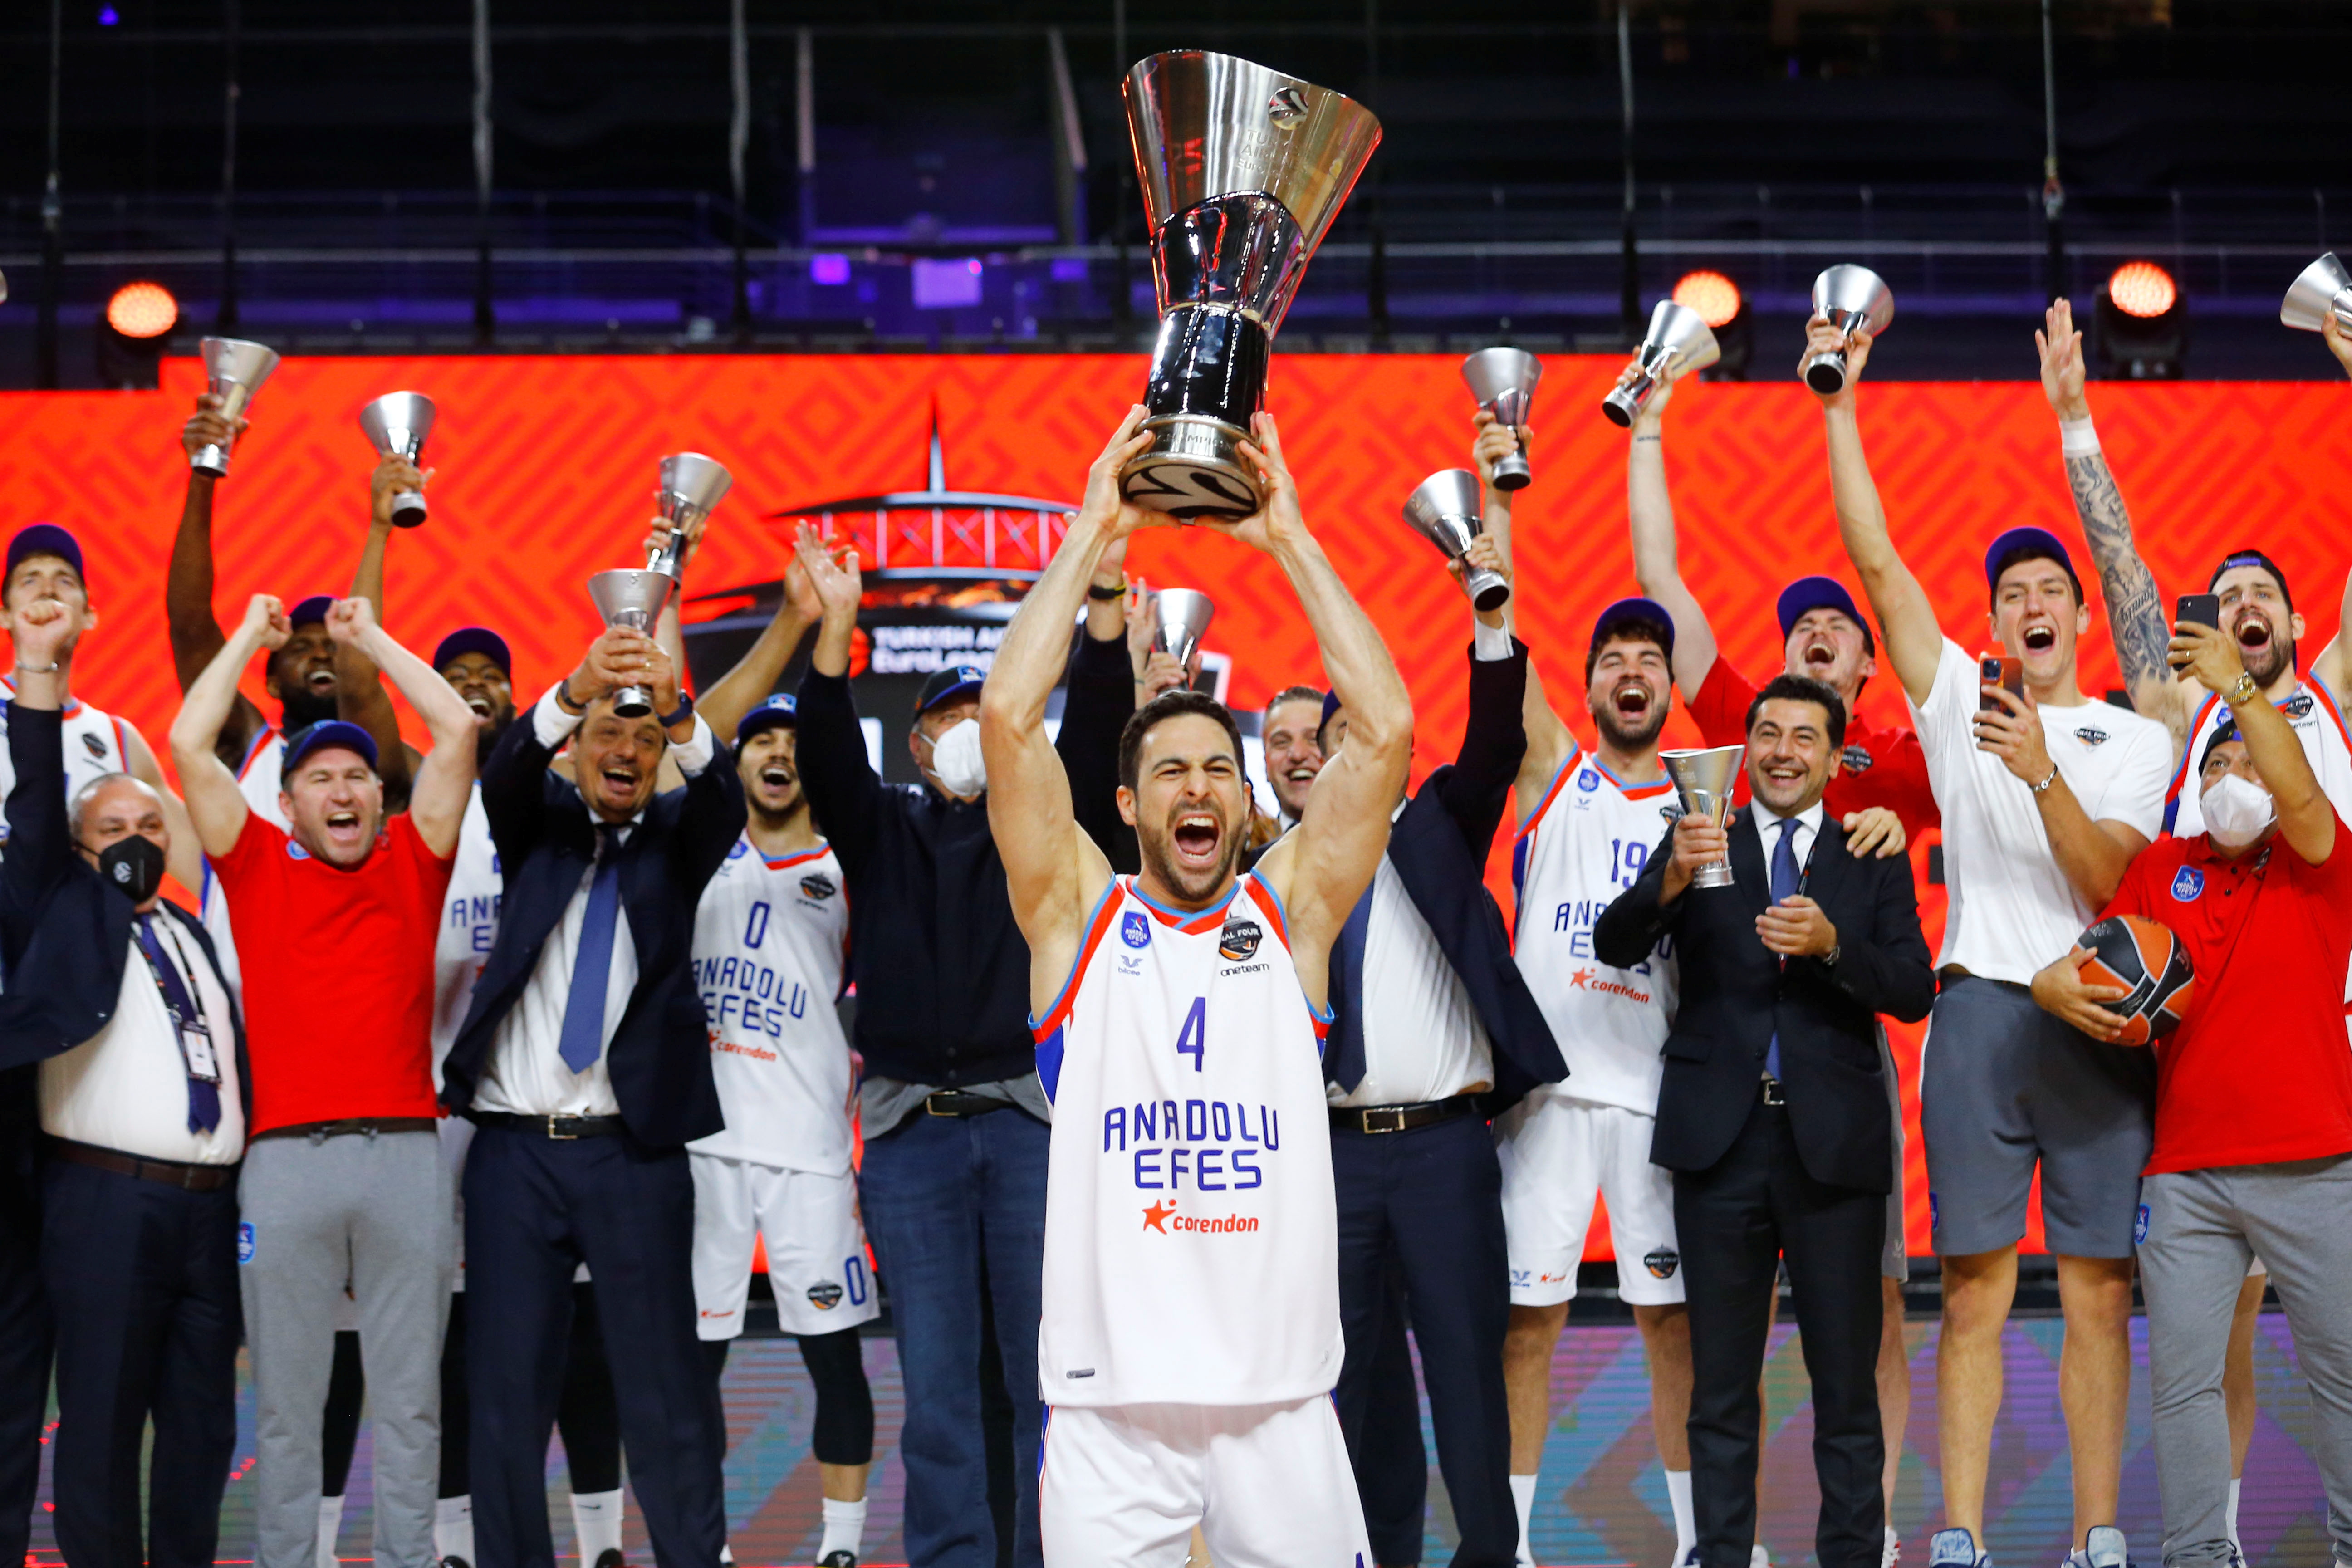 Европа баскетбол мужчины. Евролига баскетбол 2020-2021. Барселона Эфес баскетбол Евролига 2022. Anadolu Efes Euroleague Champions 2022.